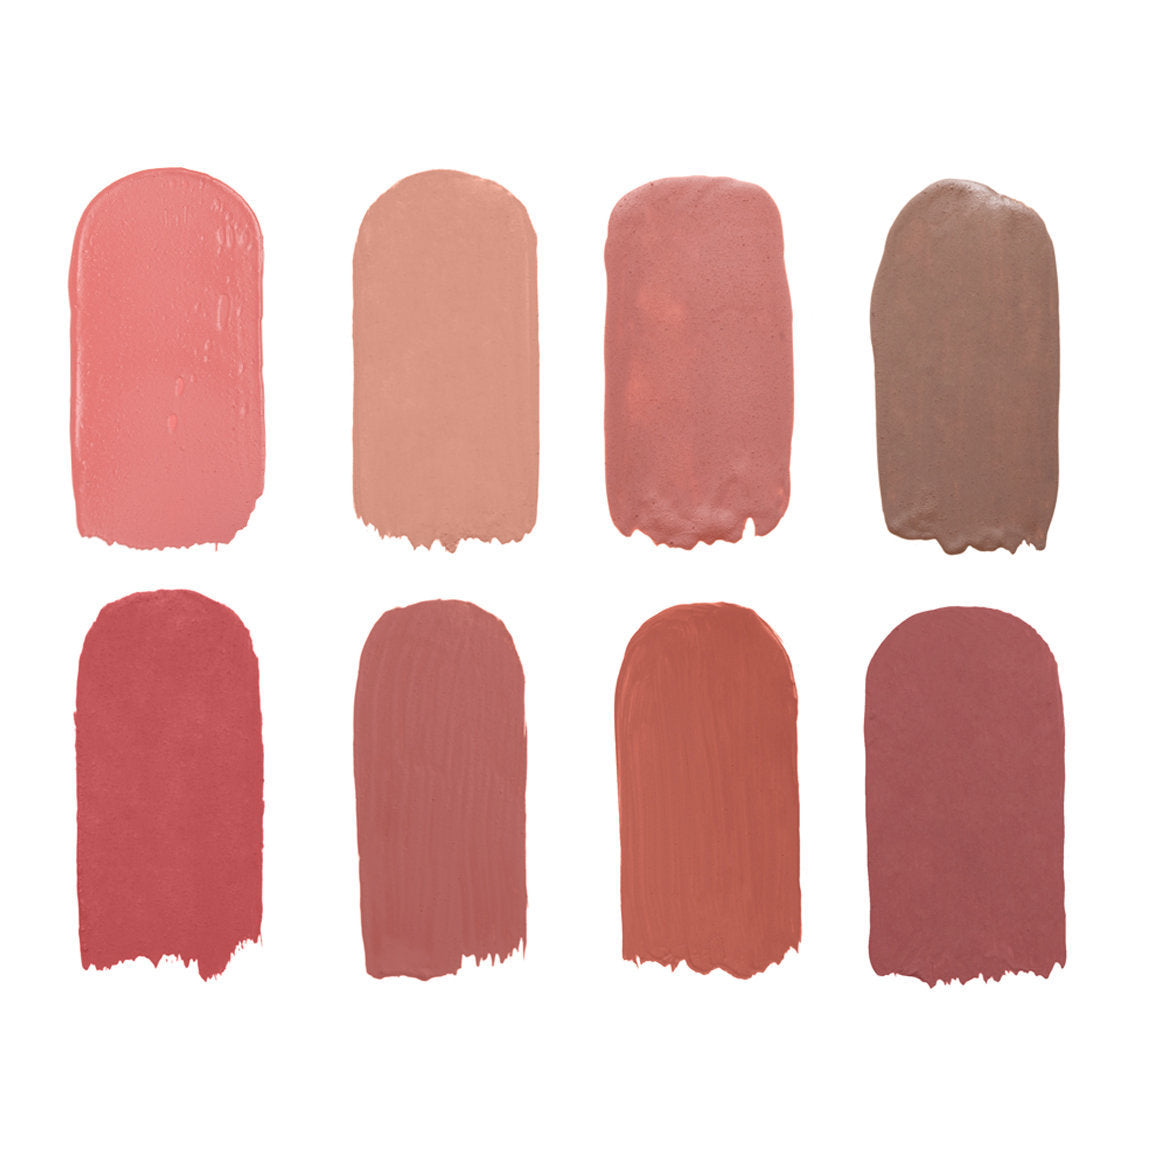 Jeffree Star cosmetics | The Mini Velour Liquid Lipsticks Nudes  | Volume One